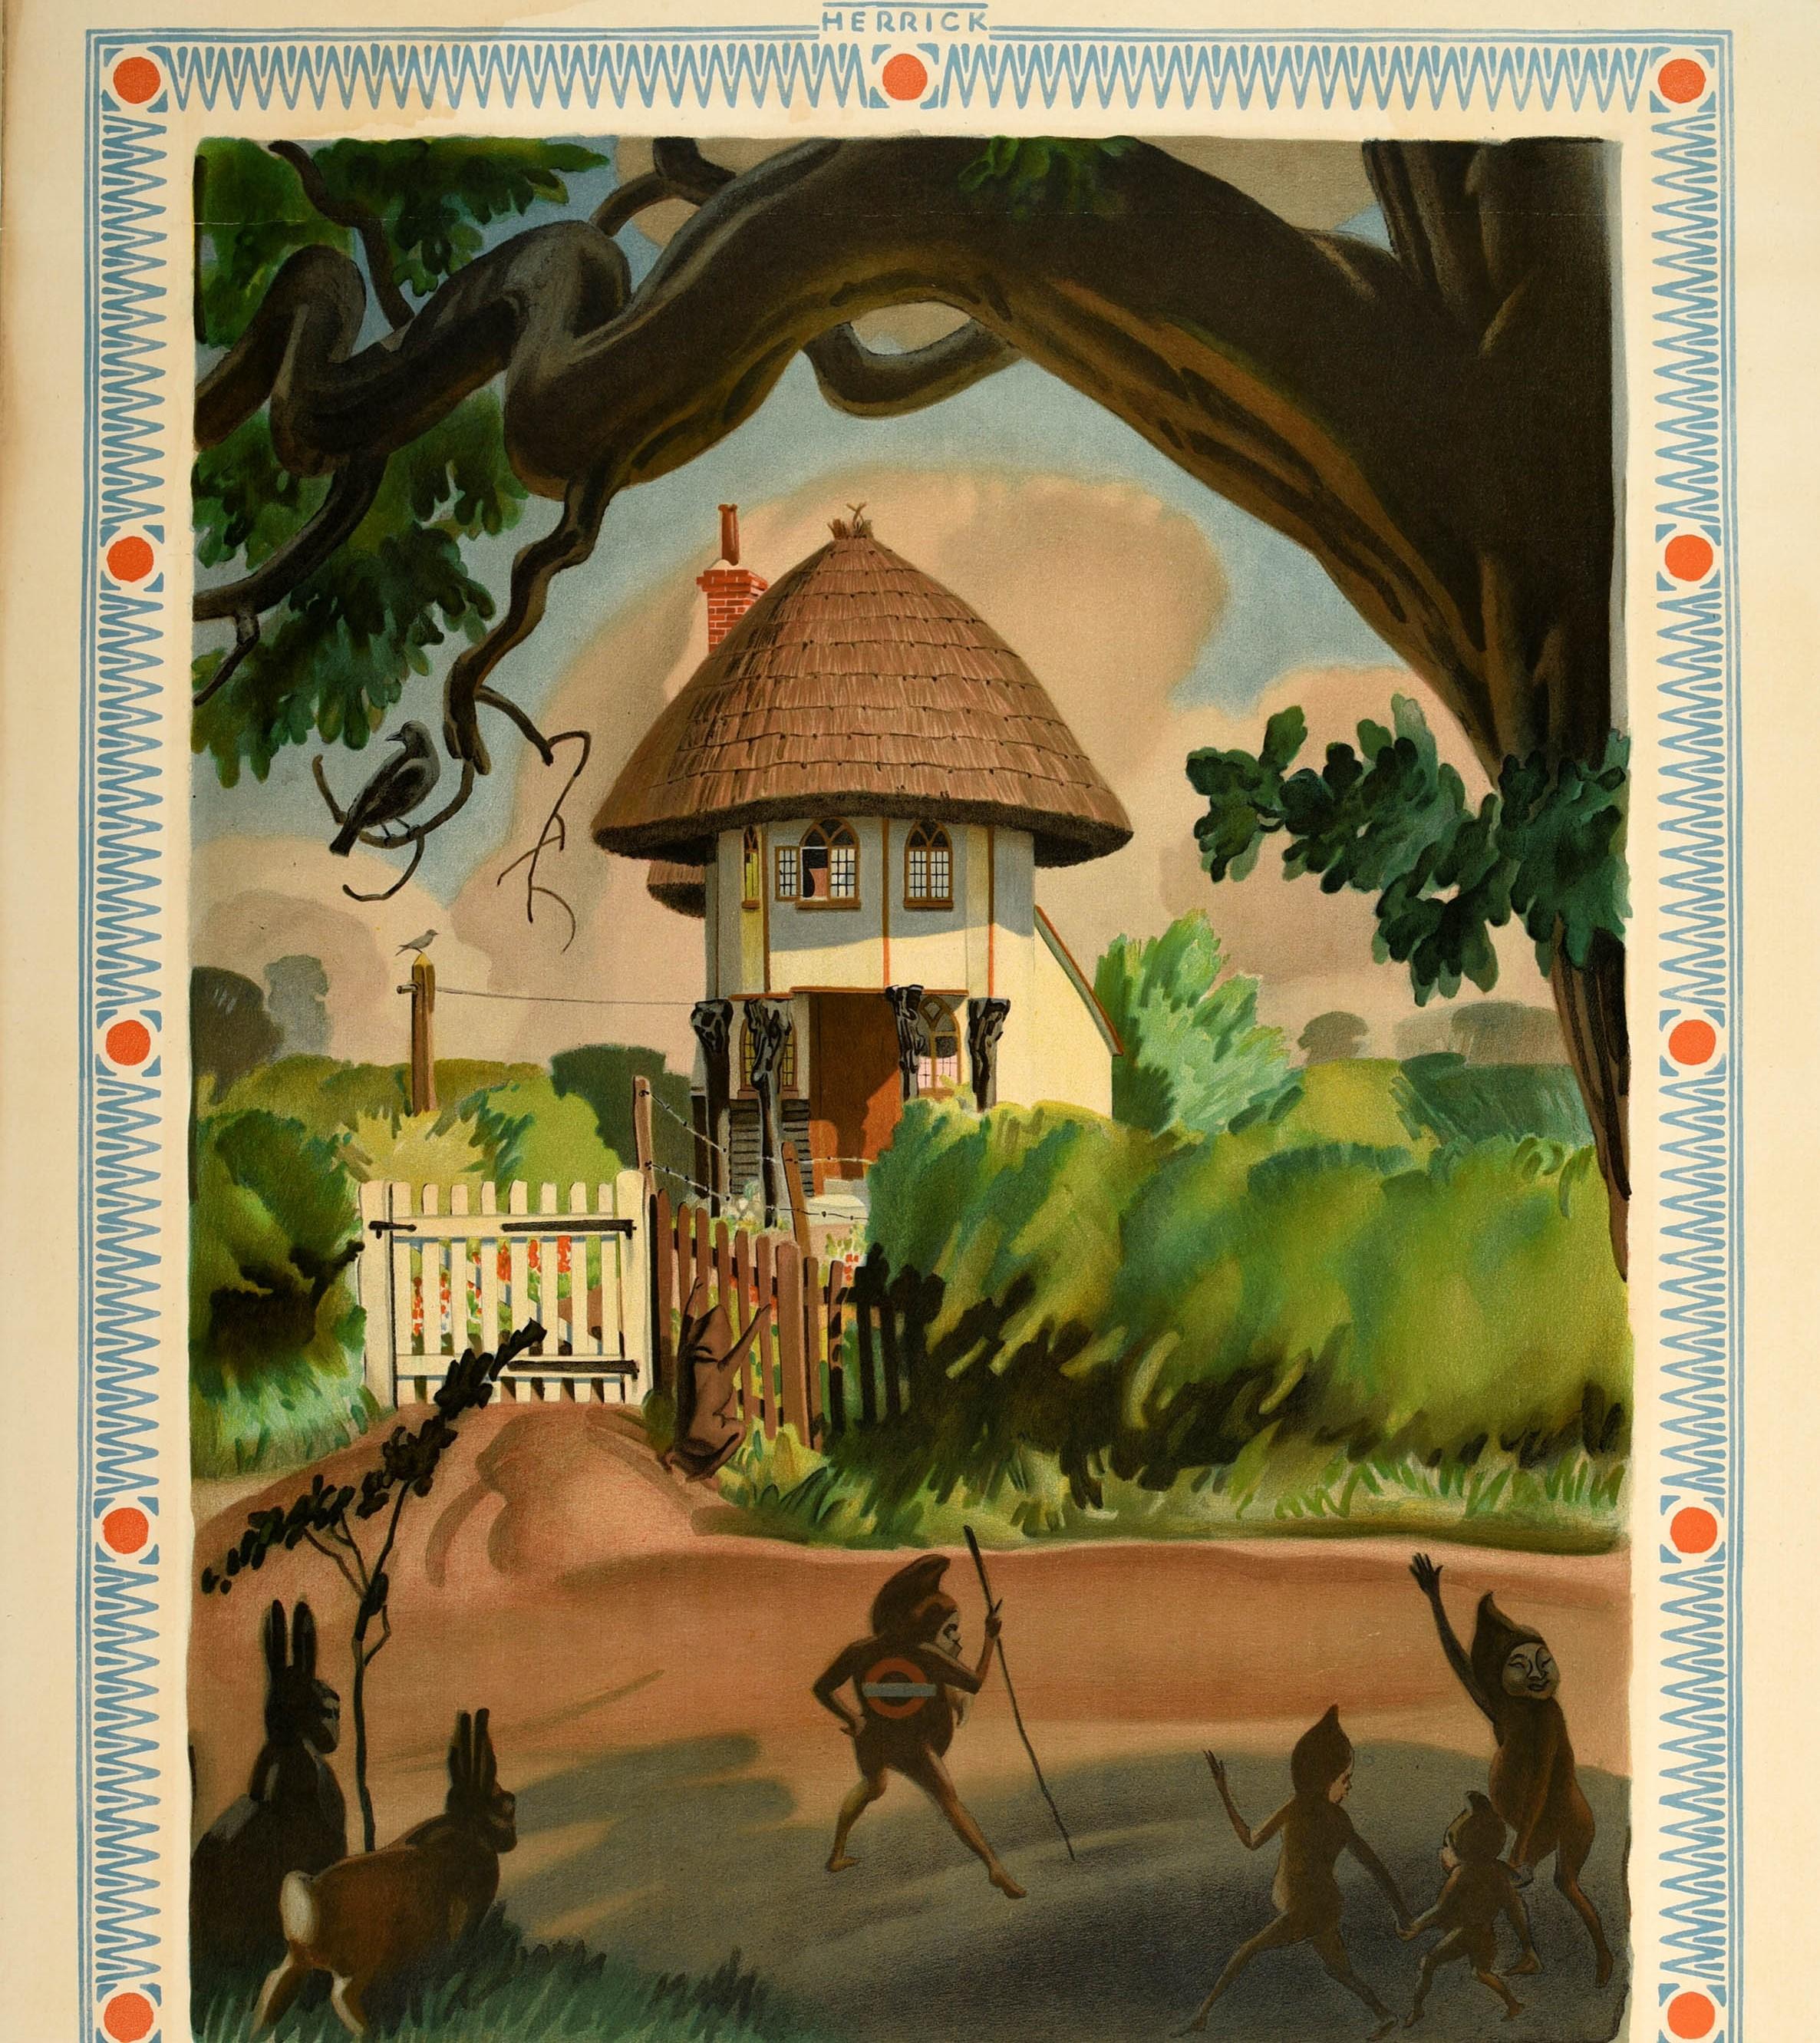 Original Vintage London Transport Travel Poster Crutch House Latton Harlow Pixie - Print by Frederick Charles Herrick